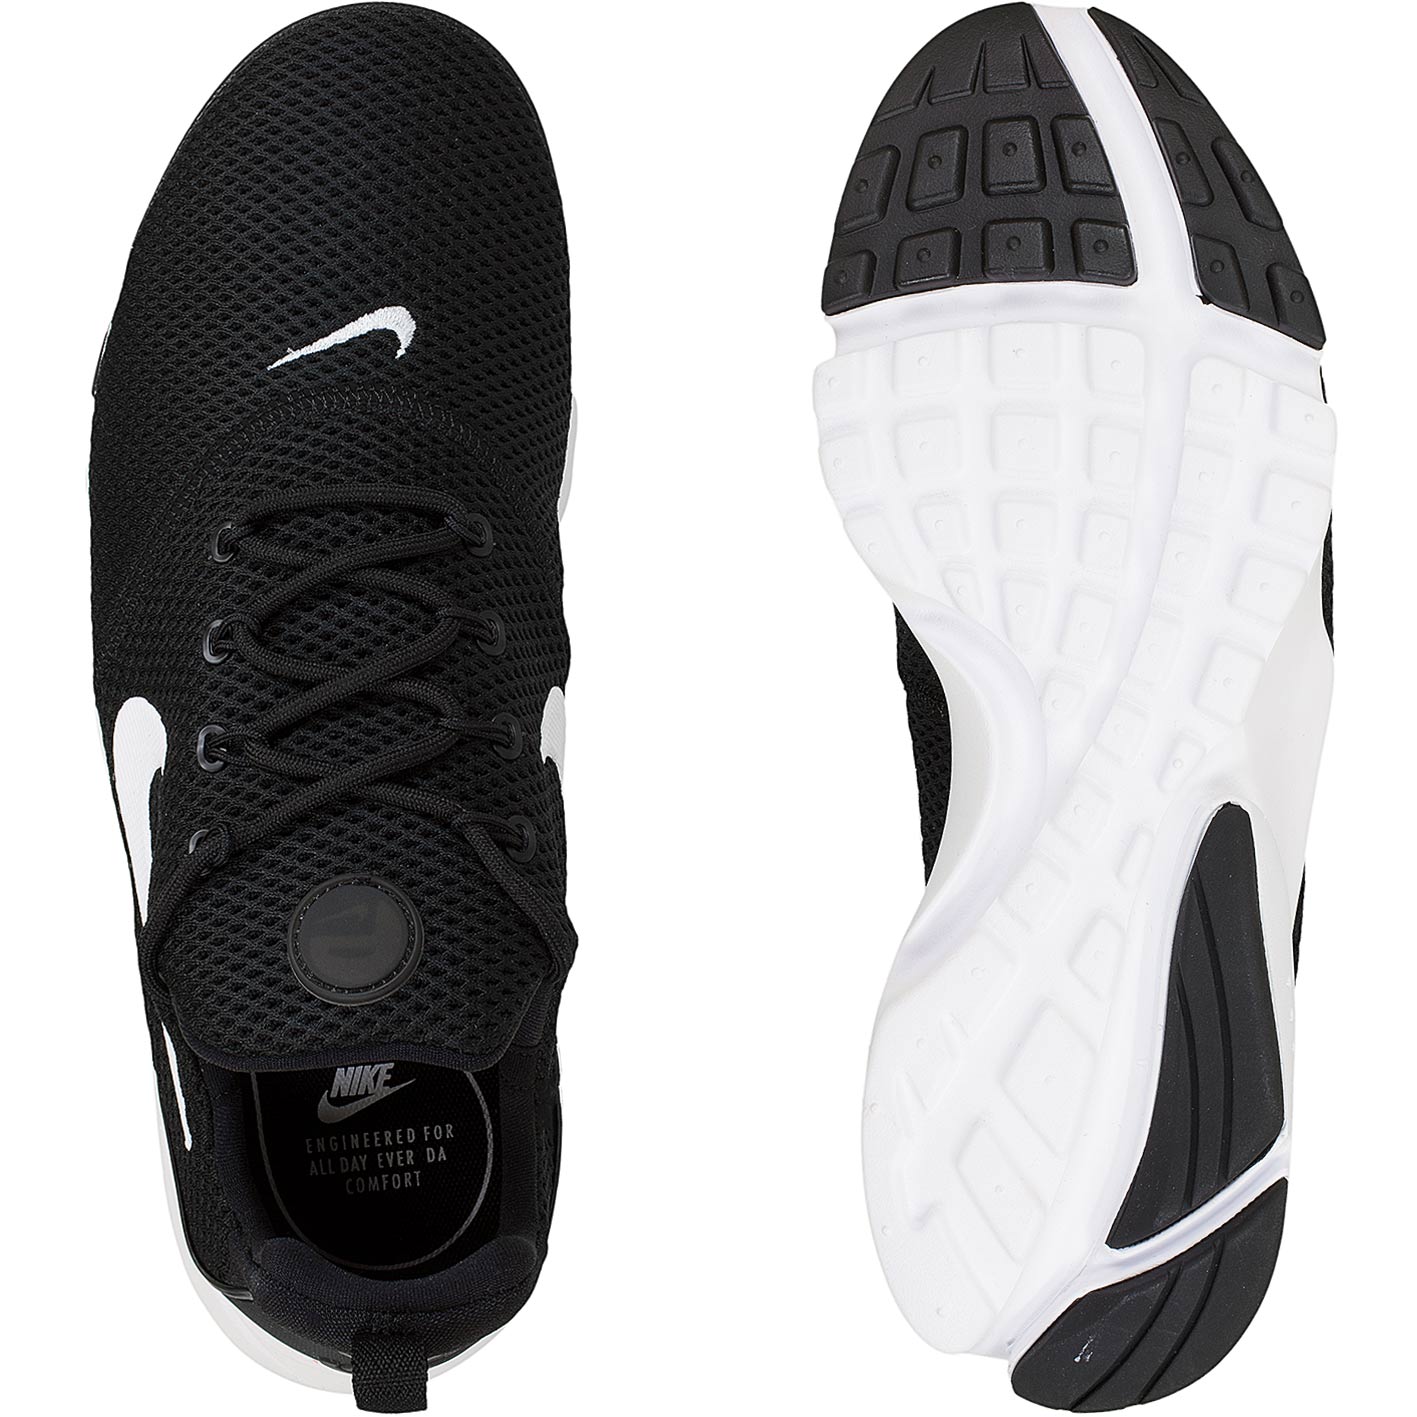 ☆ Nike Damen Sneaker Presto Fly schwarz/weiß - hier bestellen!